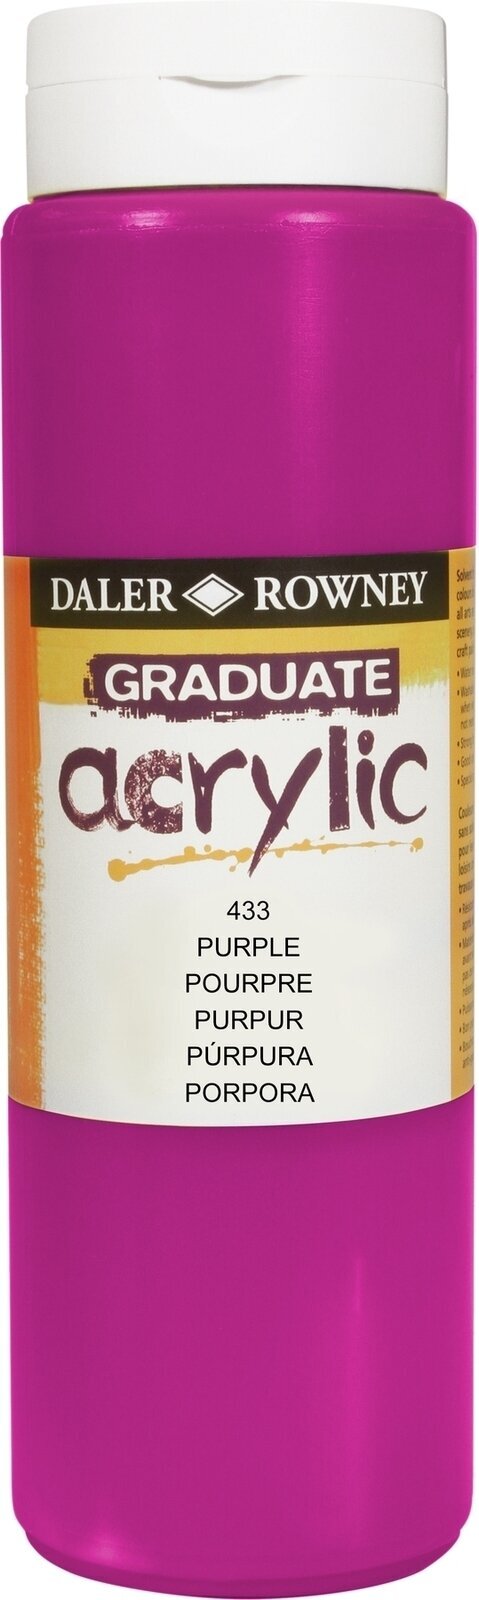 Akrylmaling Daler Rowney Graduate Akrylmaling Purple 500 ml 1 stk.